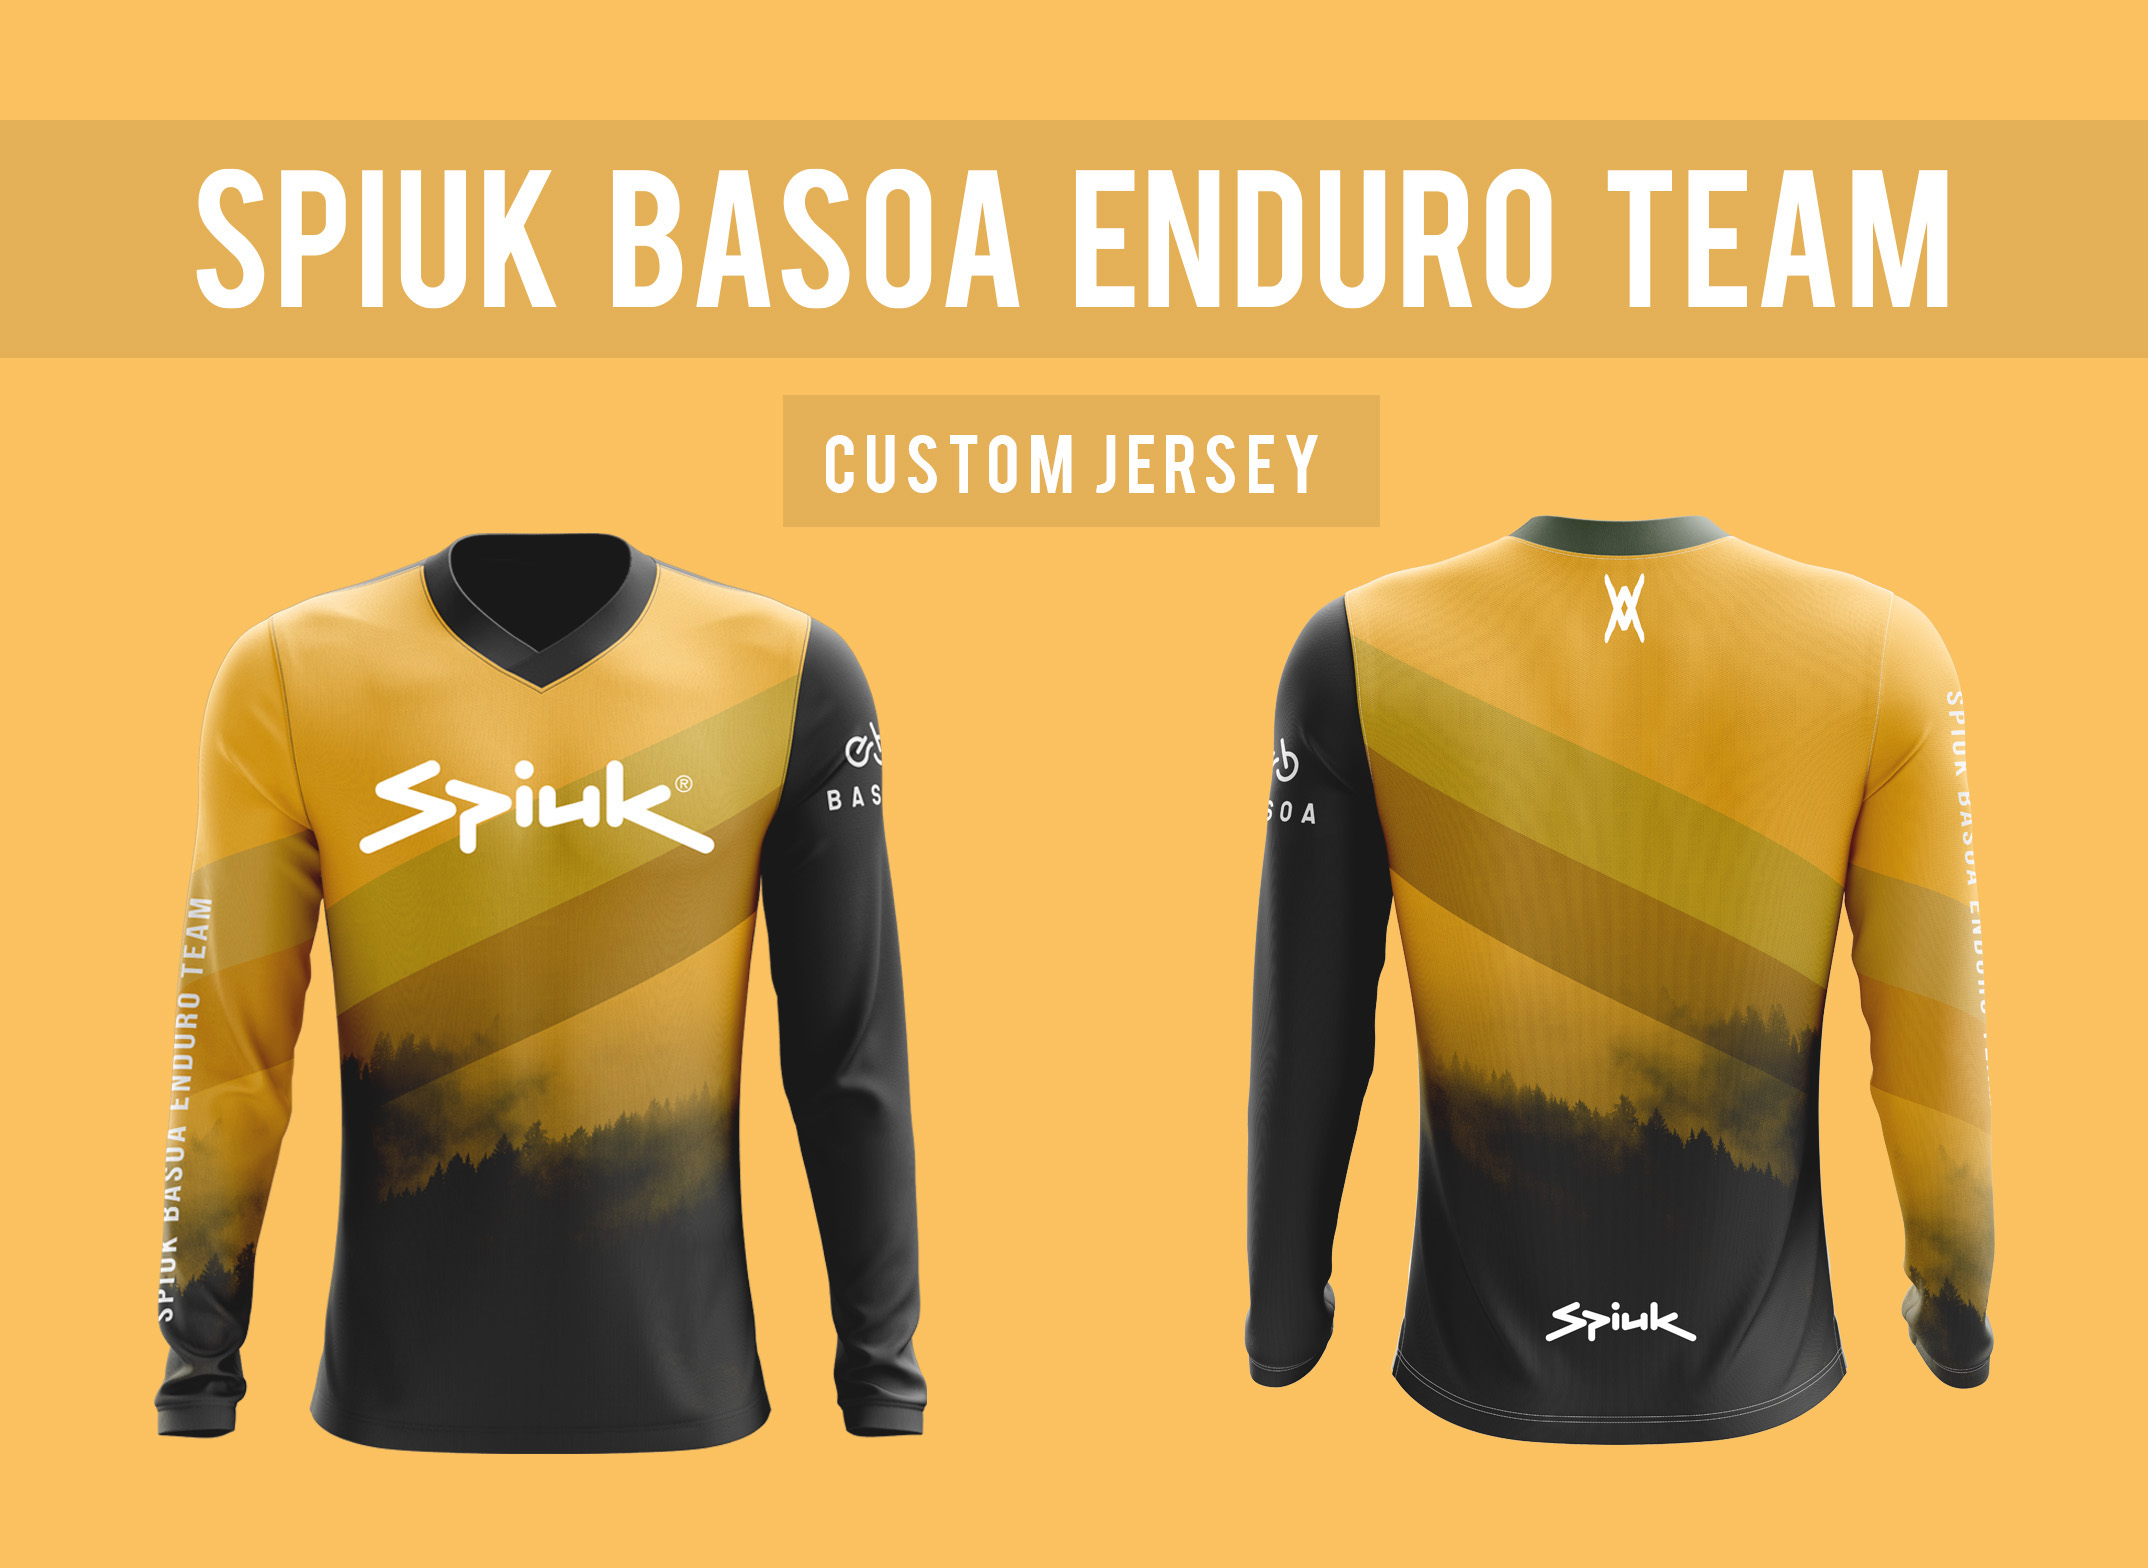 Spiuk Basoa Enduro Team la marca española se apunta al enduro MTB